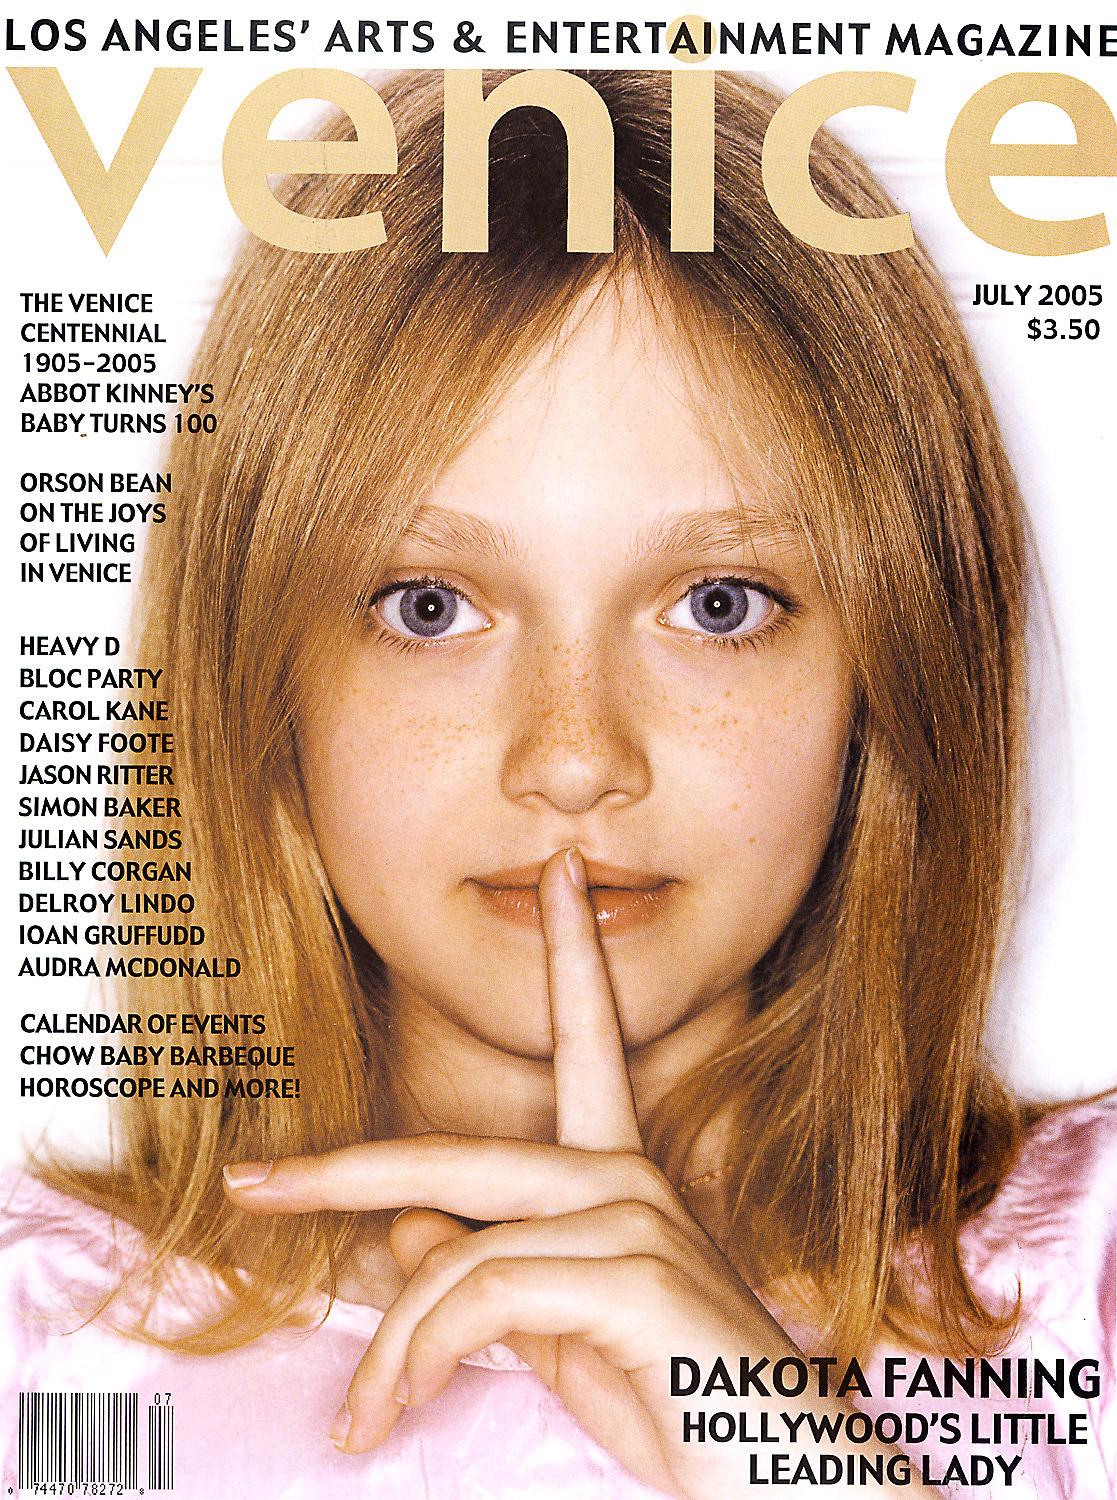 DAKOTA-FANNING-Photography-by-Indira-Cesarine-Venice-Magazine-Cover.jpg